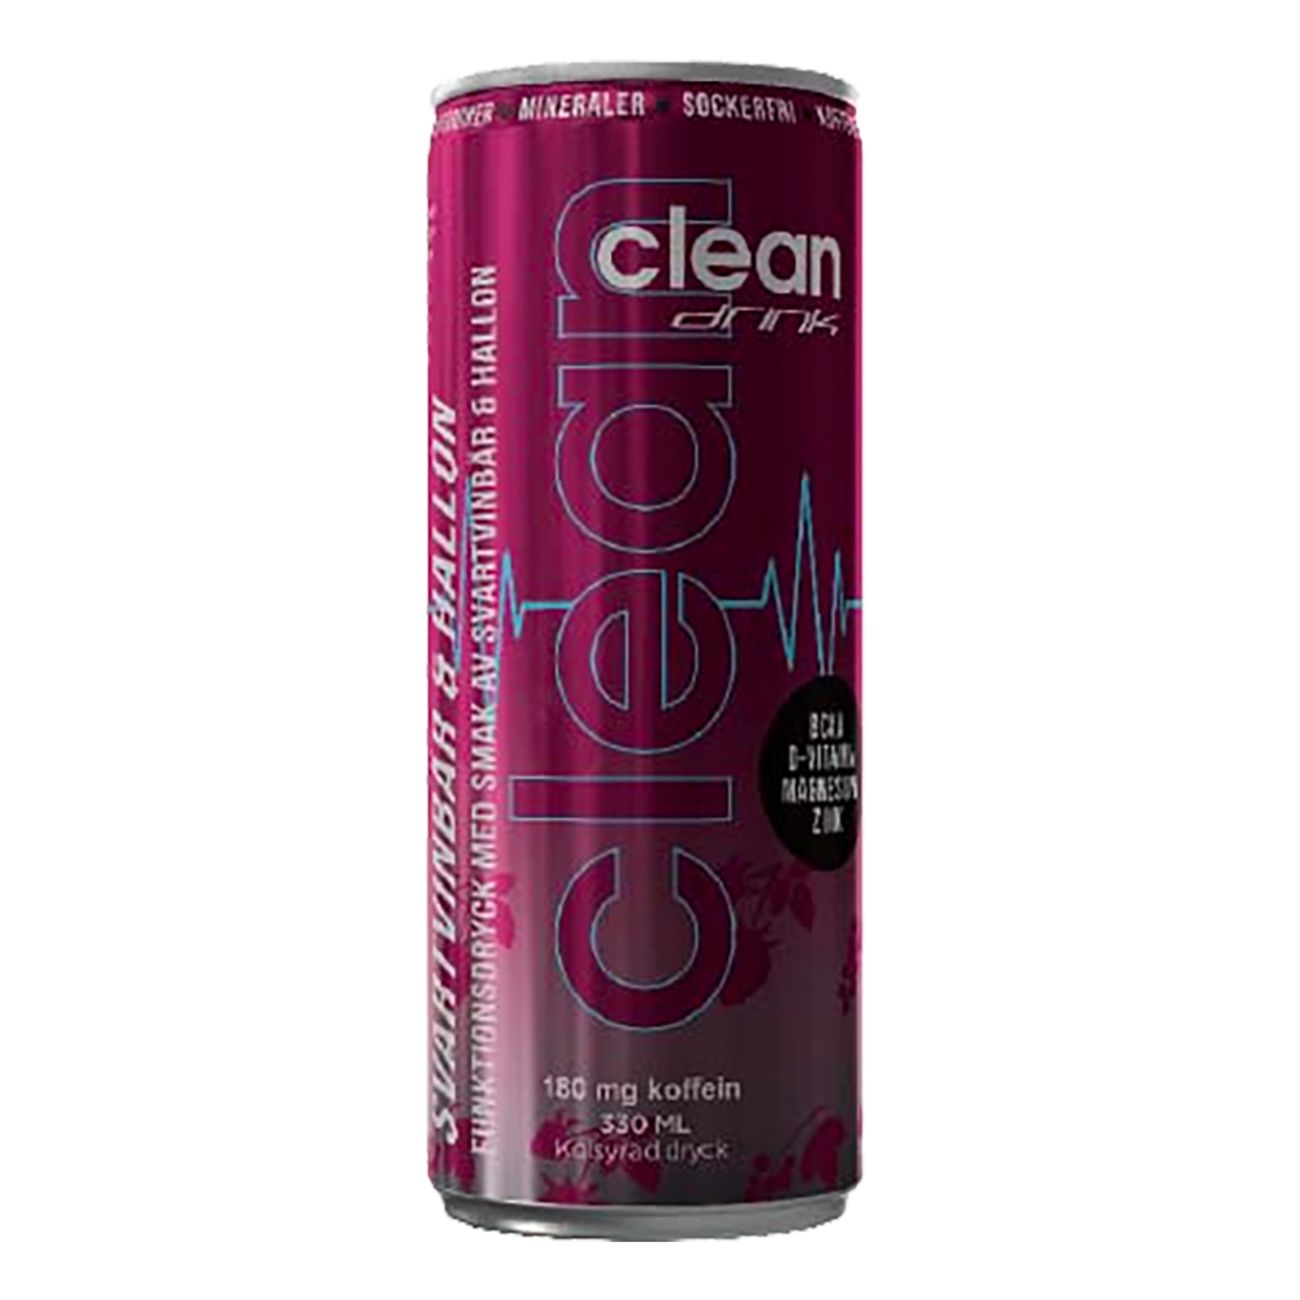 clean-drink-svartvinbarhallon-82506-1